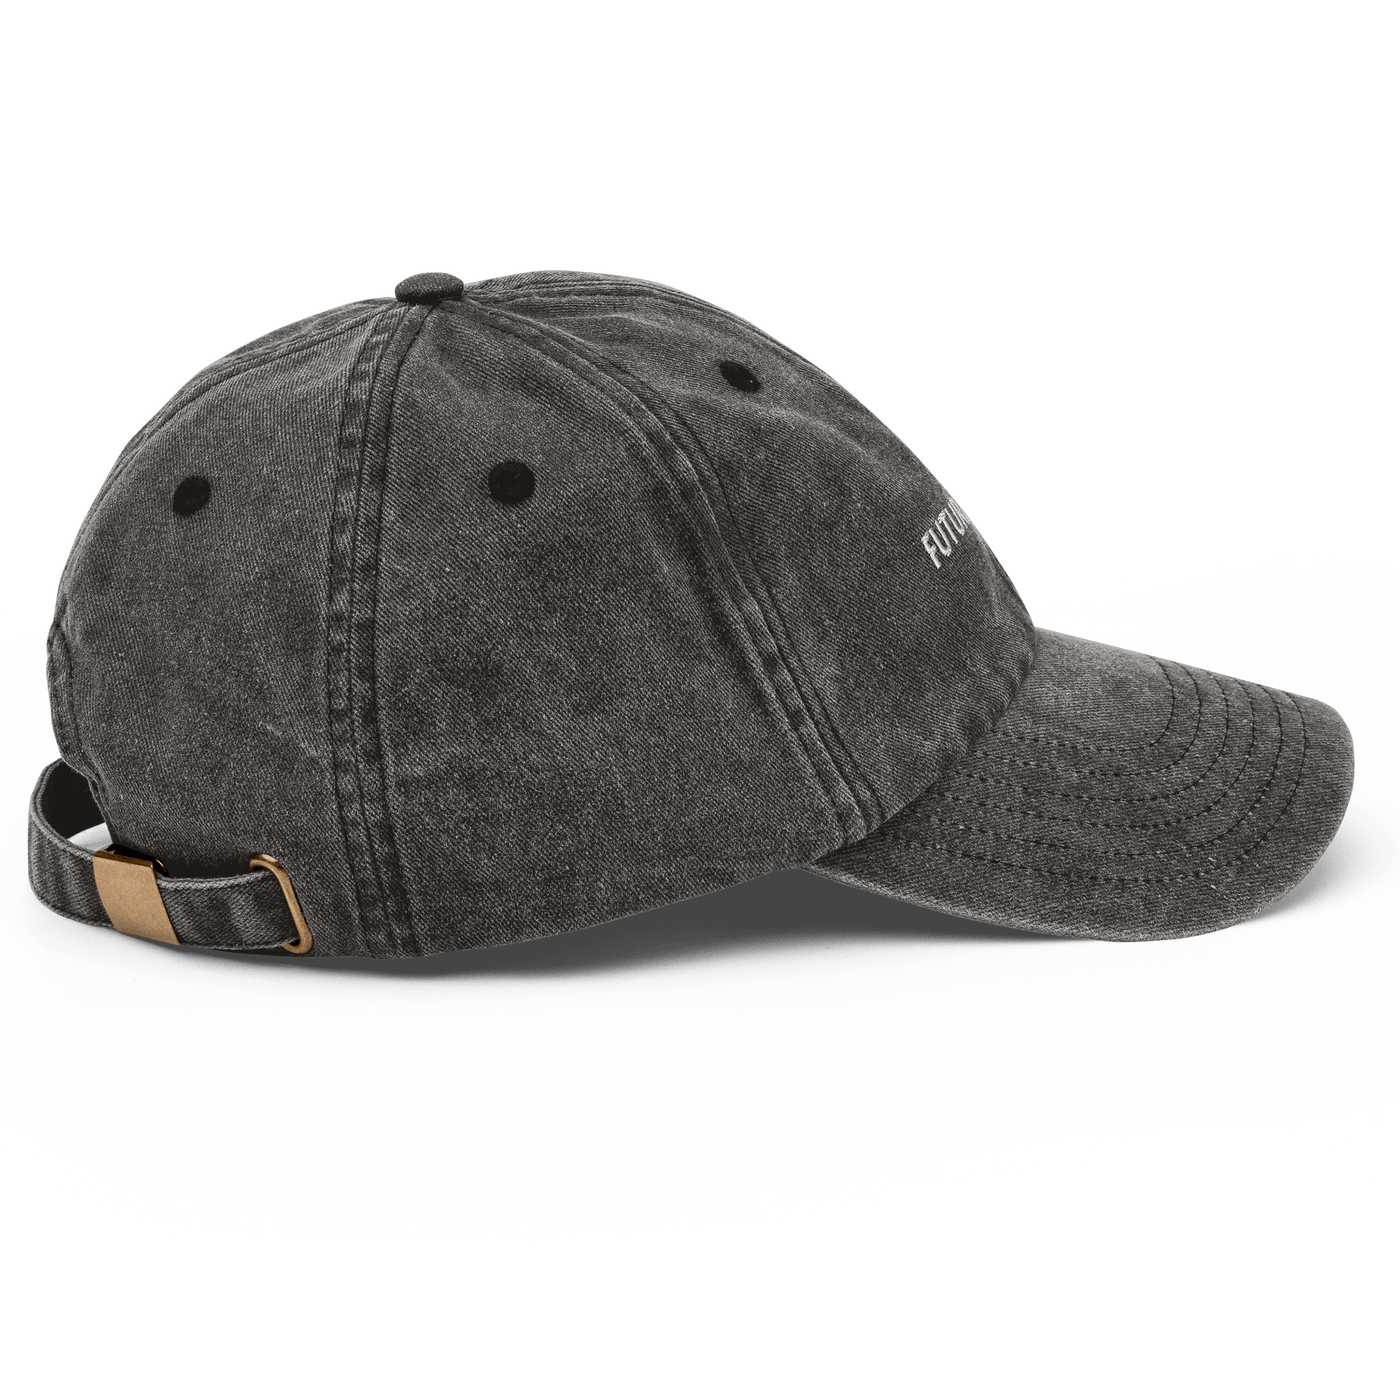 Future Dilf Vintage Hat - Vintage Black - - Just Another Cap Store